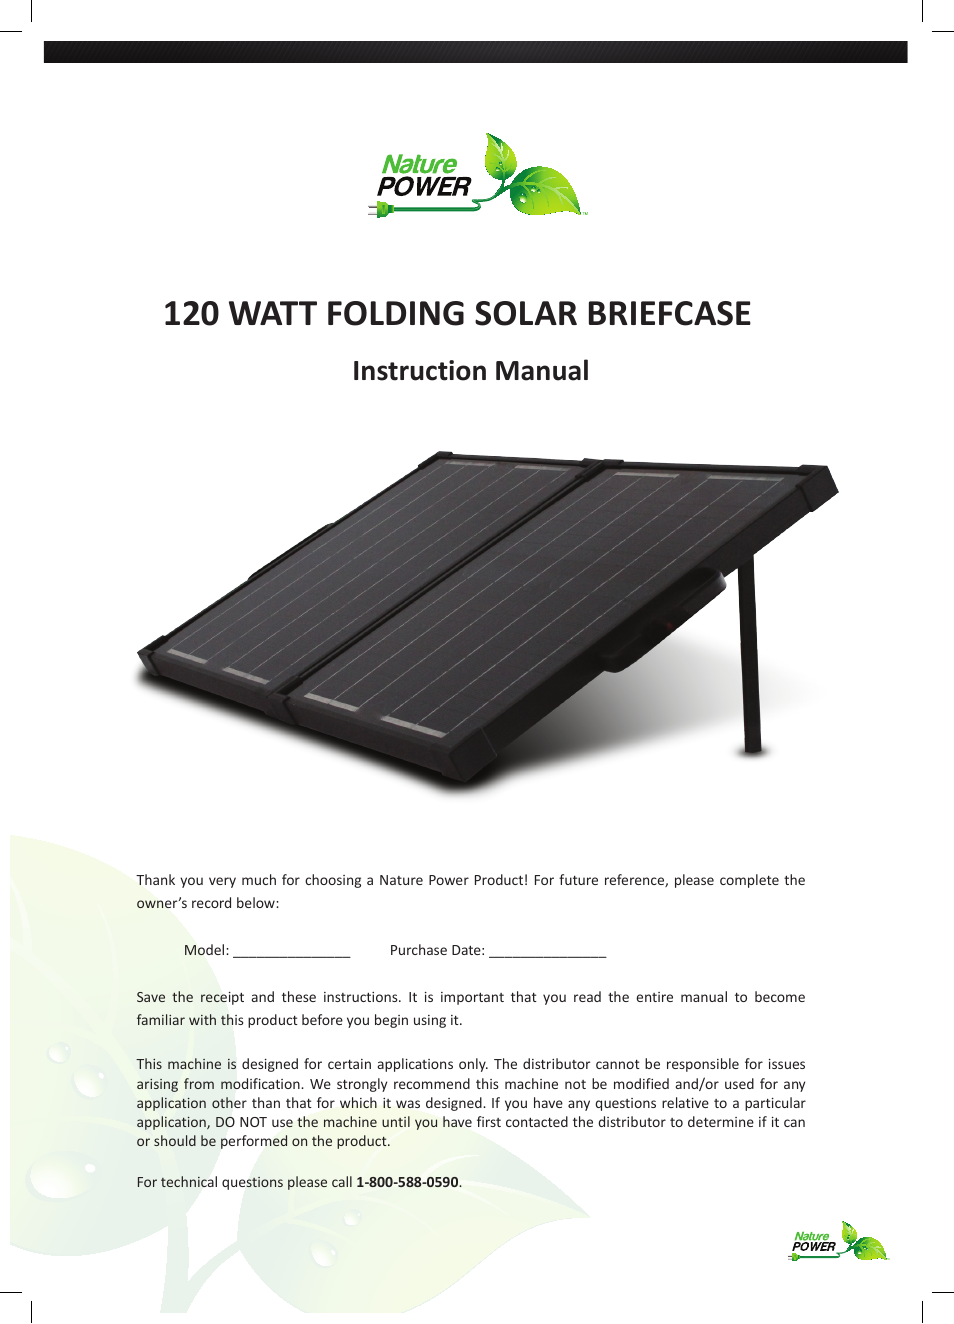 120 WATT FOLDING SOLAR BRIEFCASE (55702)